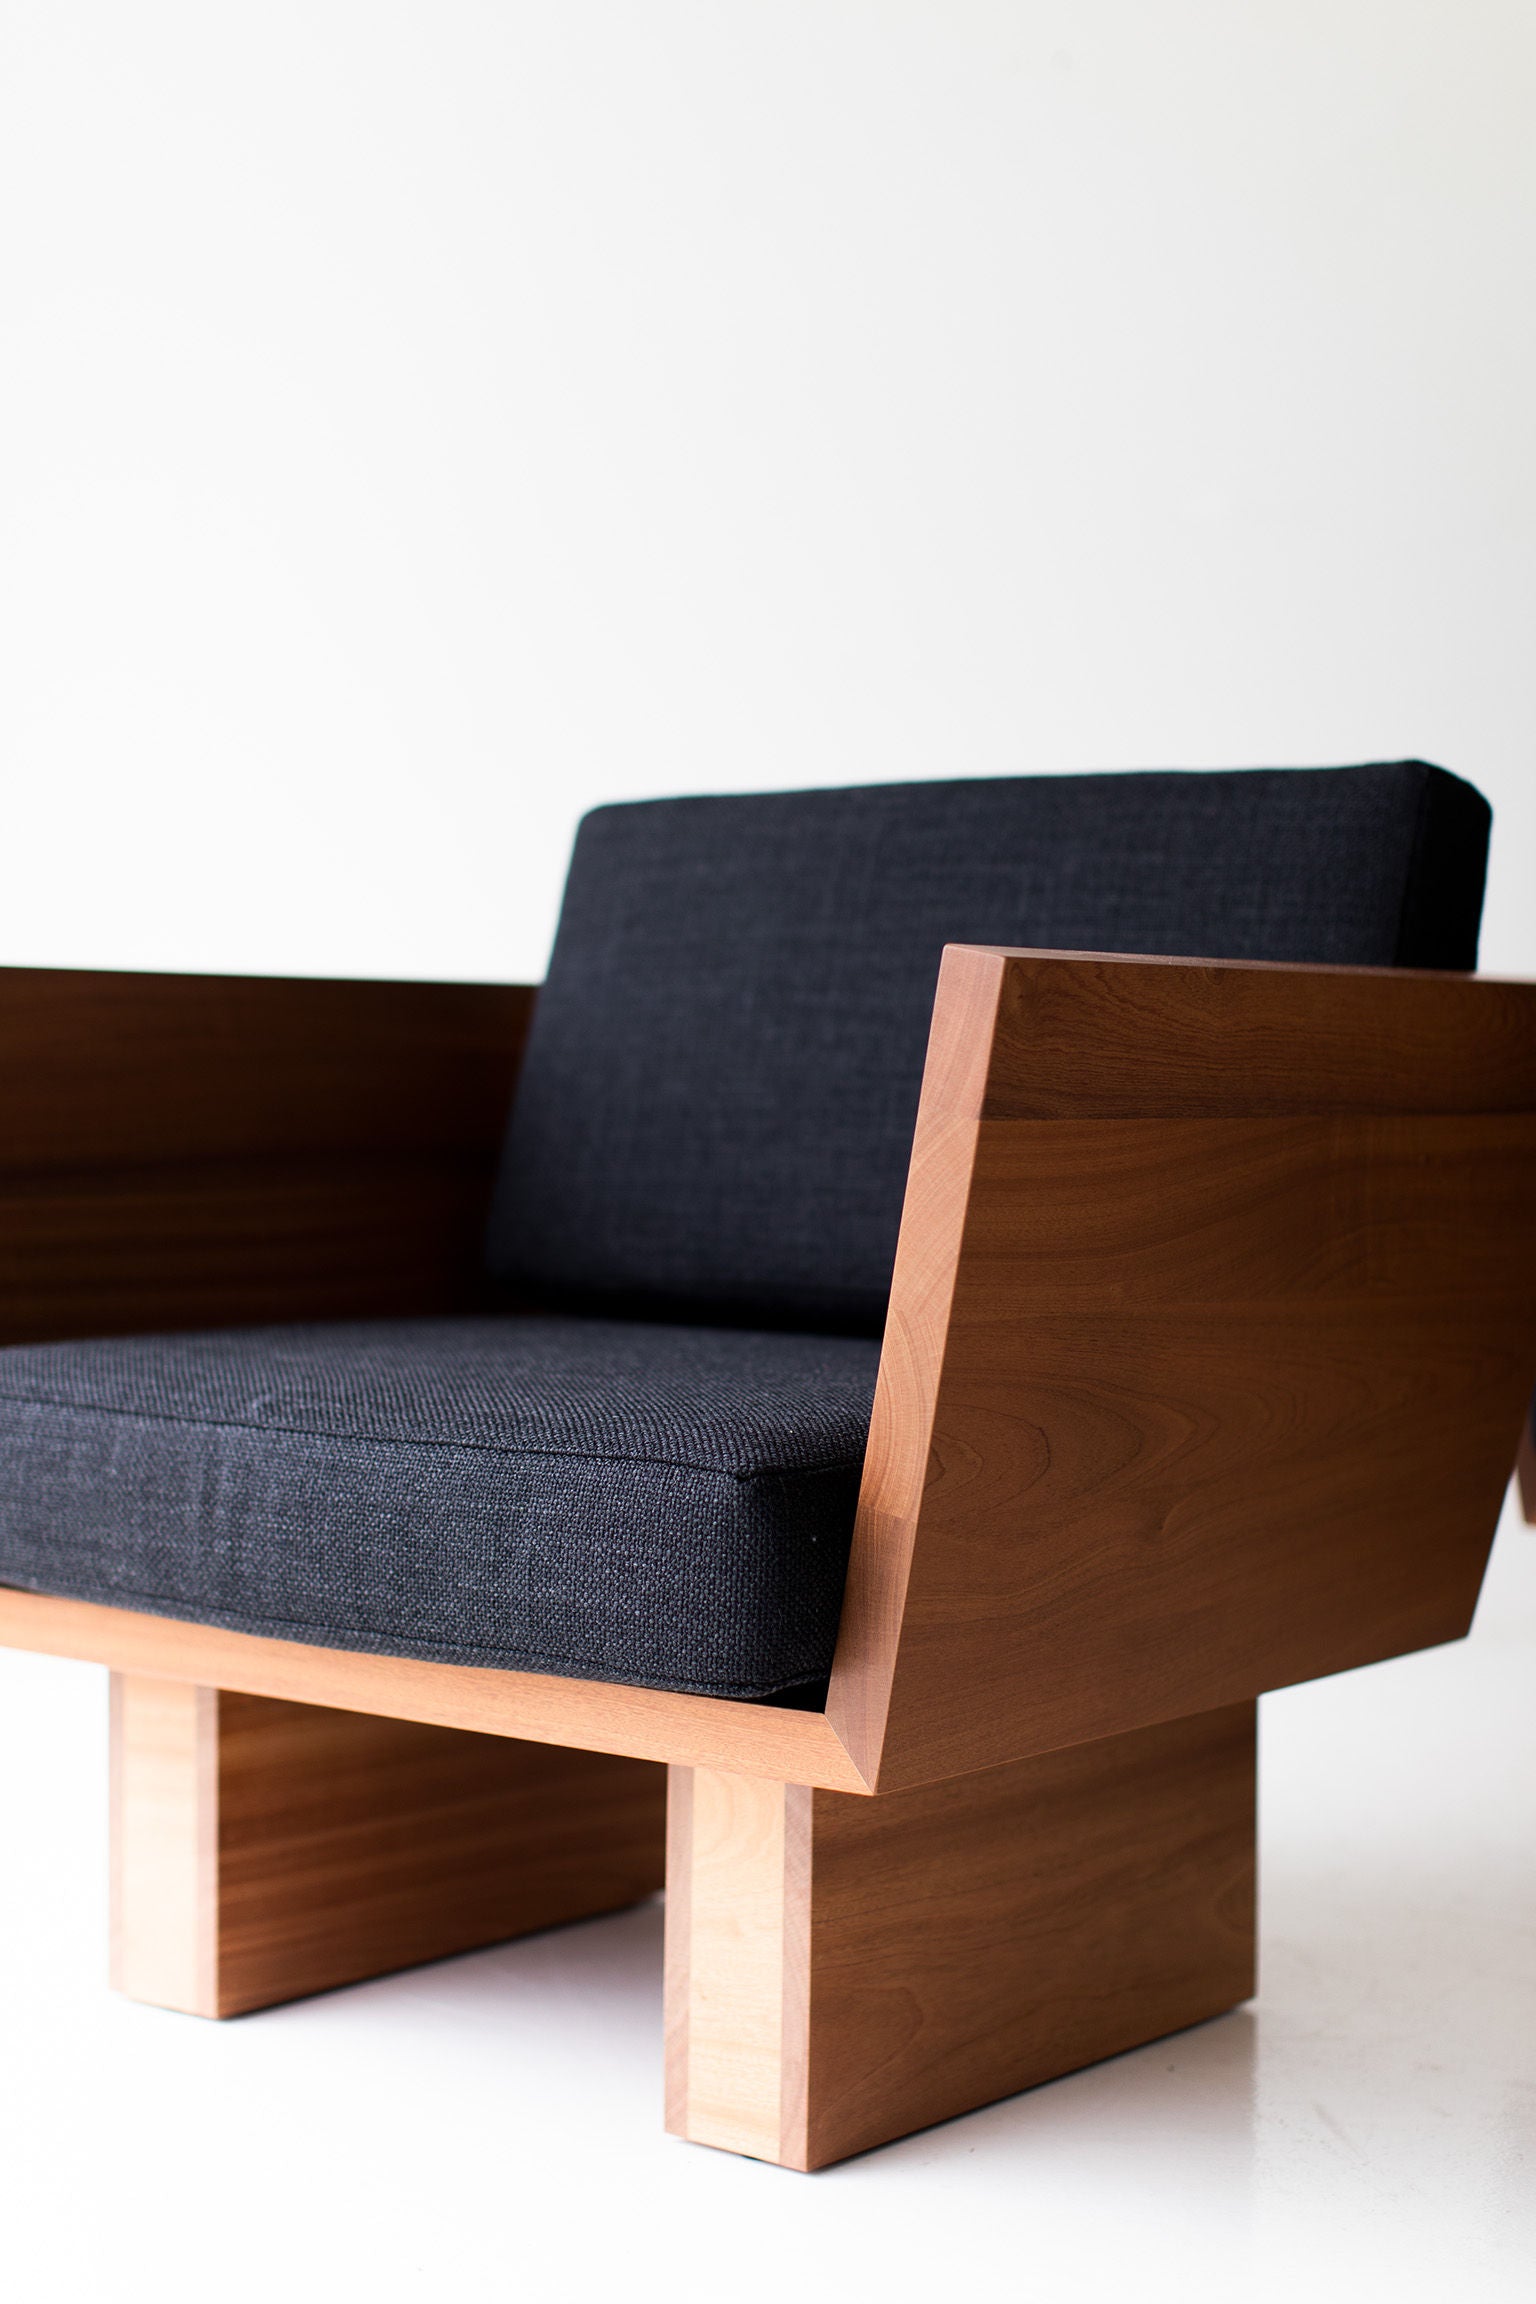 Suelo-Outdoor-Modern-Lounge-Chair-1120-19